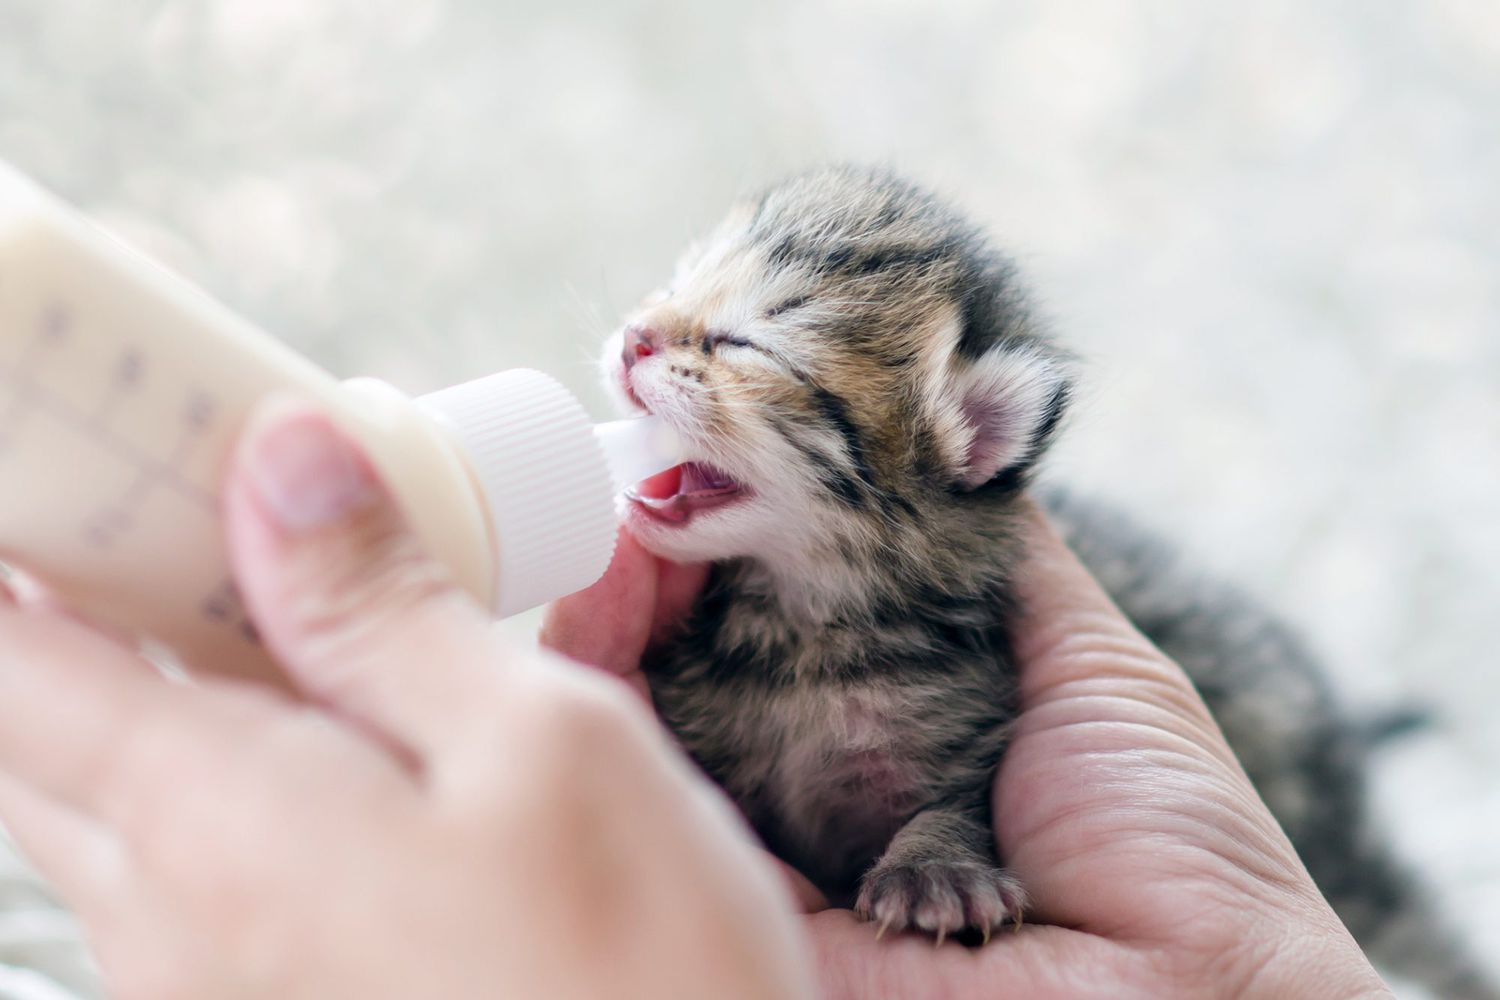 holding newborn kittens